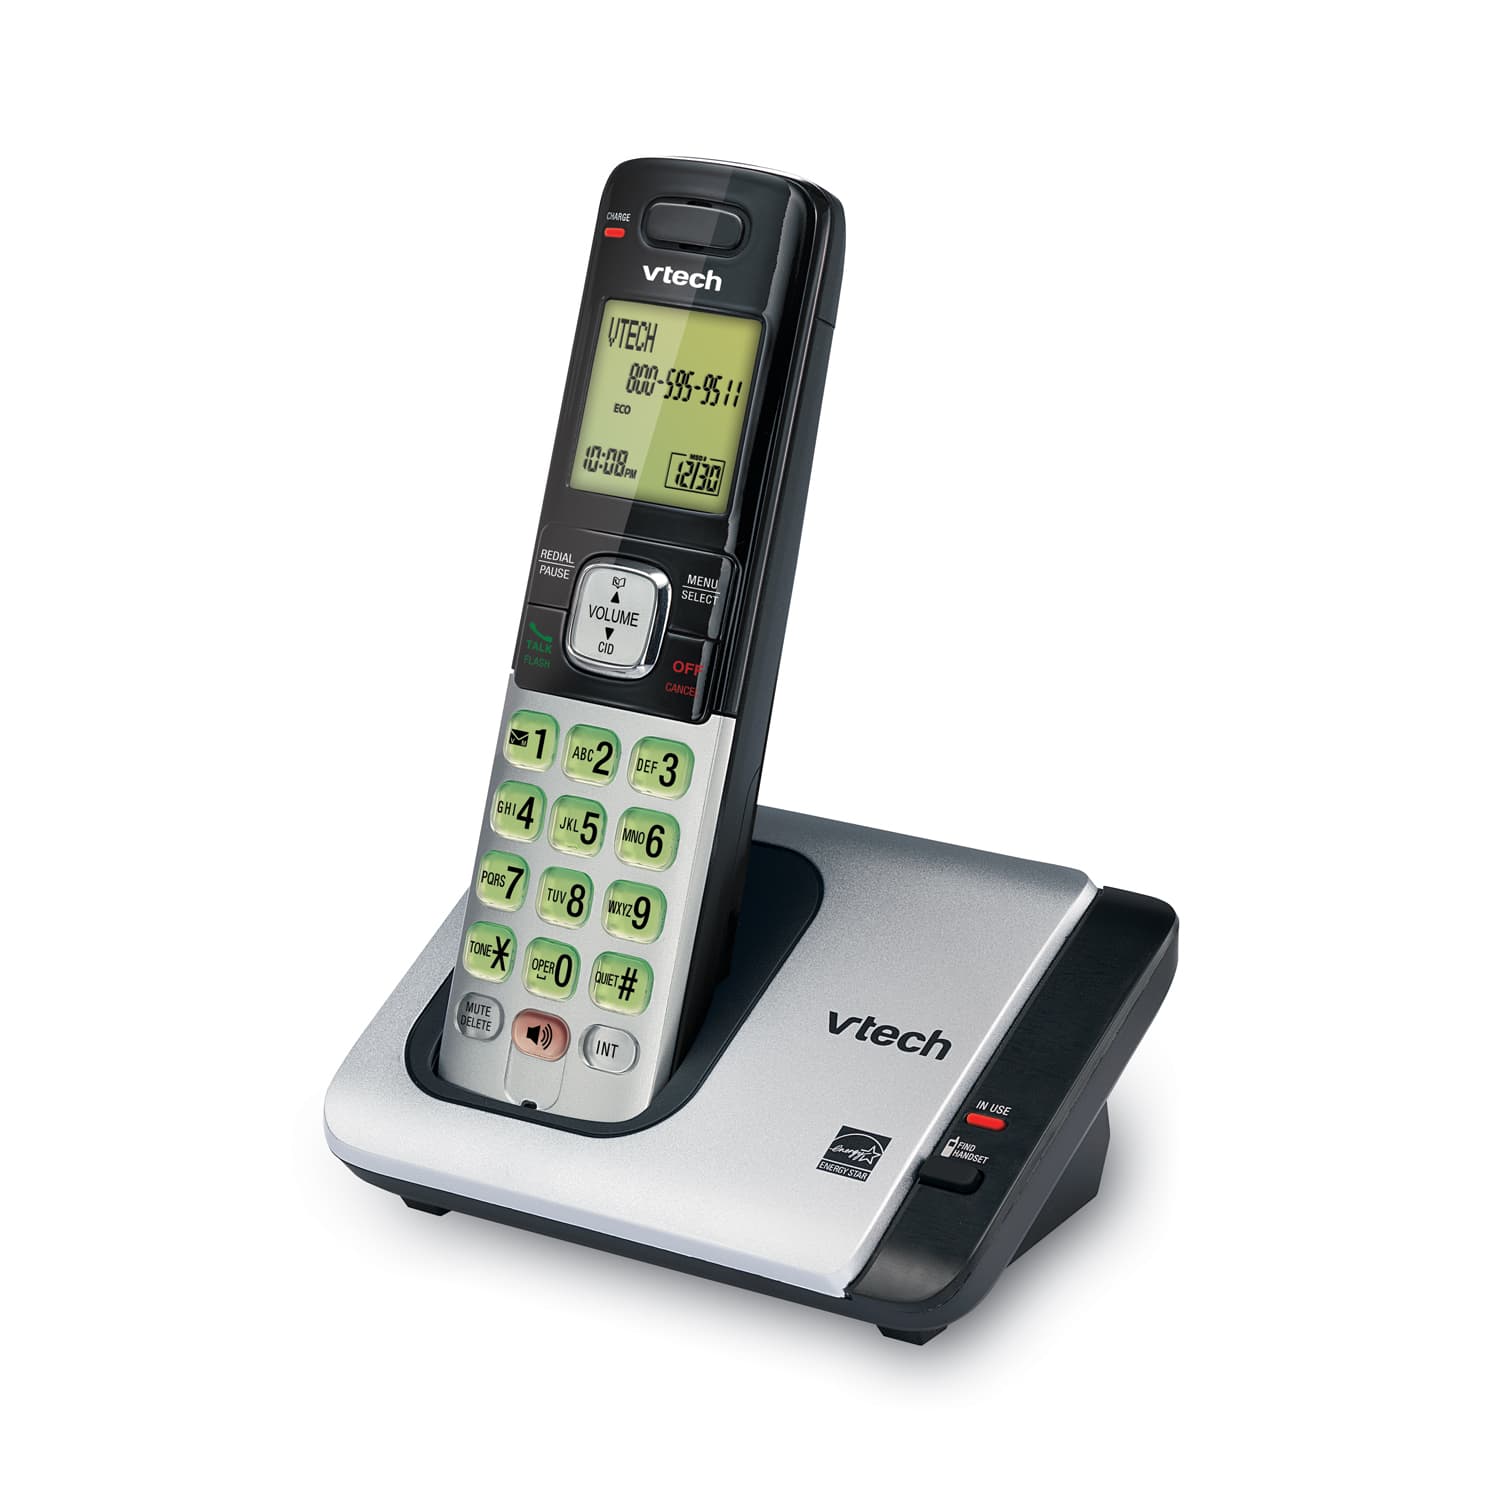 Handset Intercom & Backlit Display/Keypad Renewed VTech CS6719-2 2-Handset Expandable Cordless Phone with Caller ID/Call Waiting 